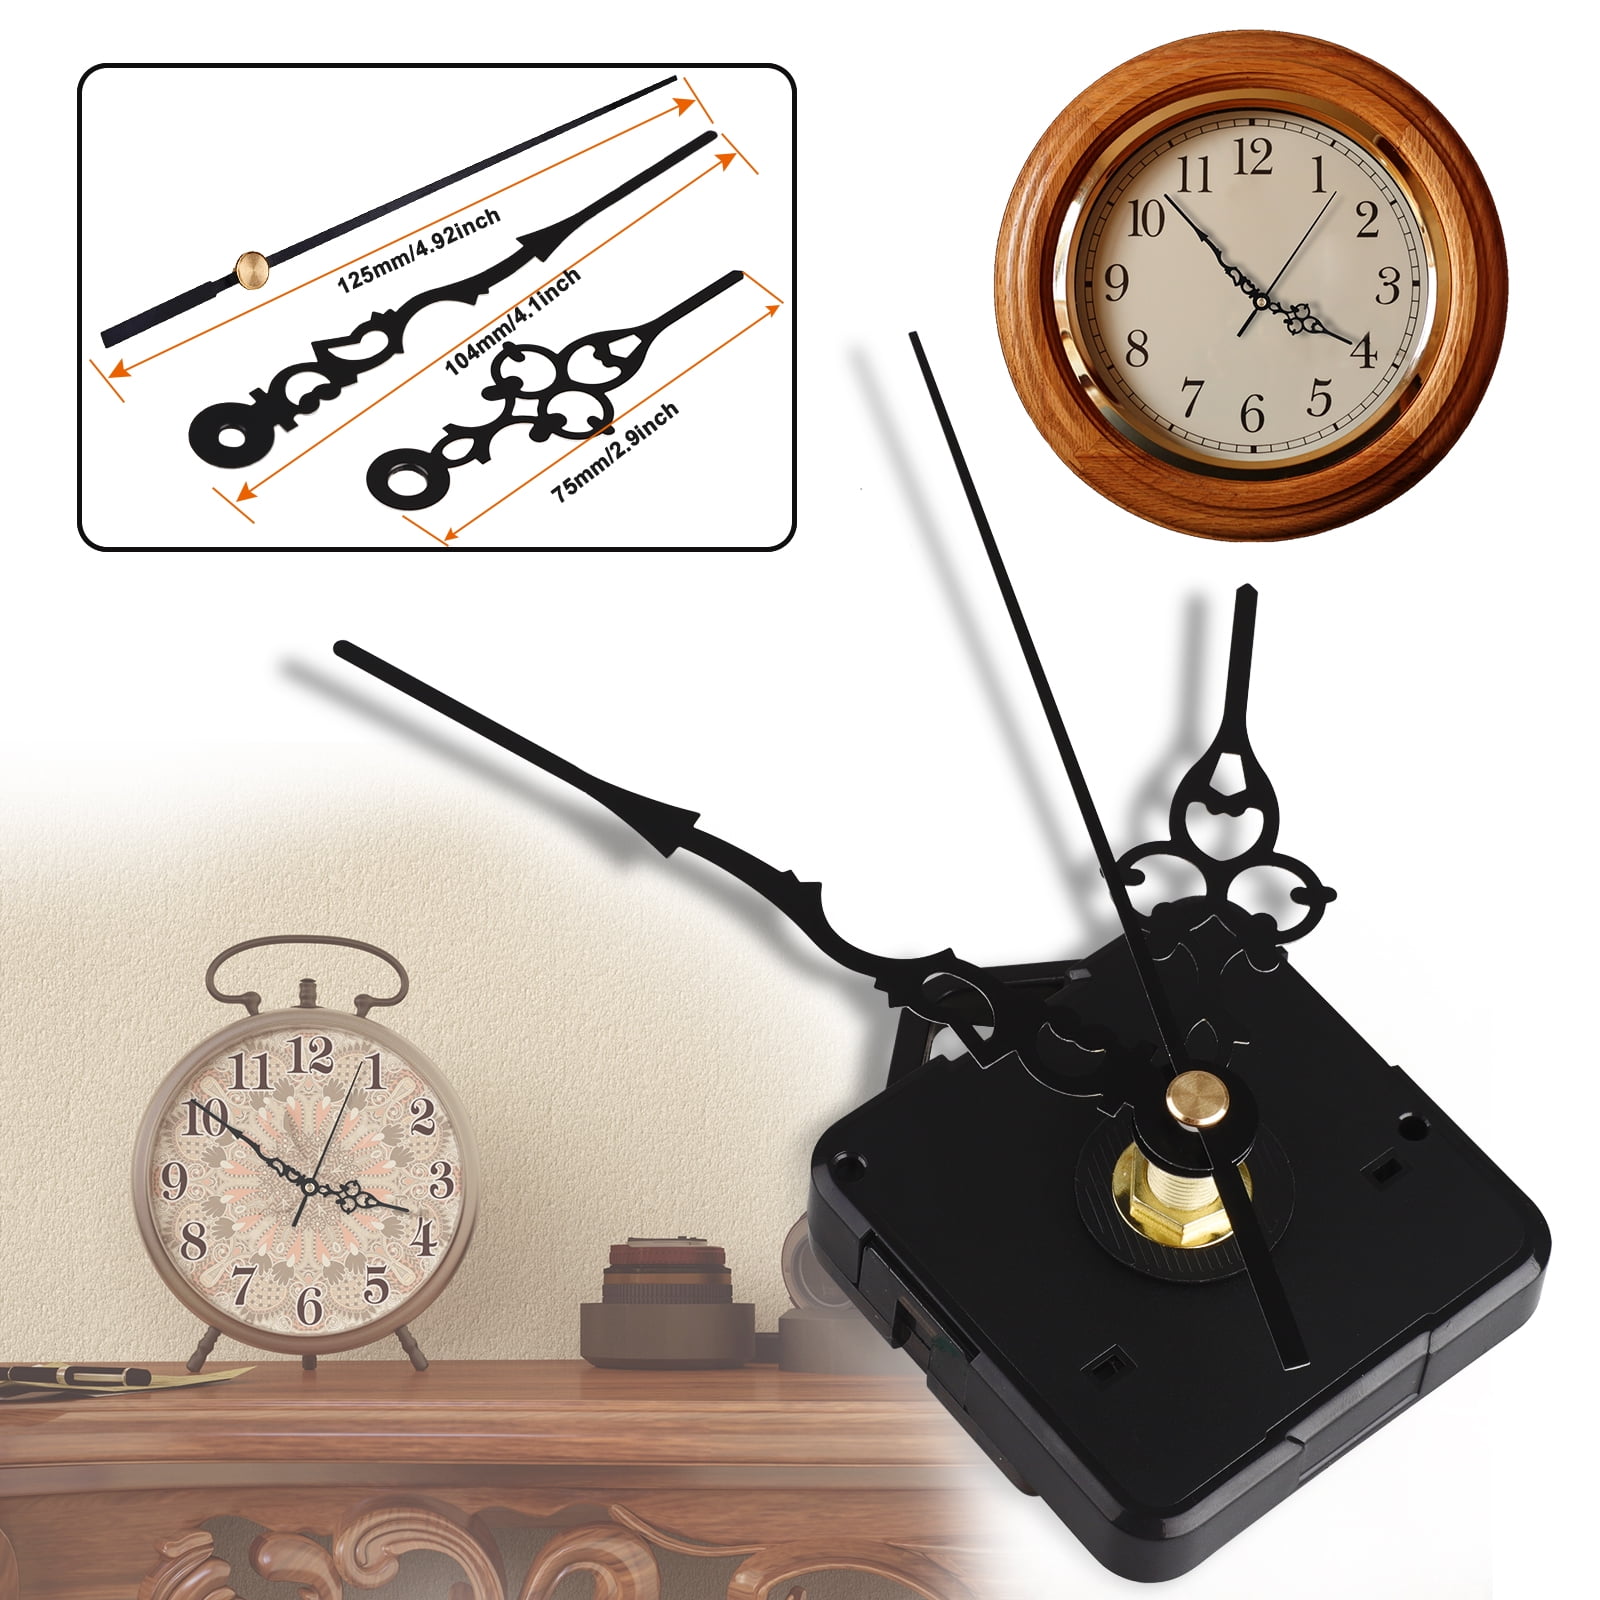 Quartz Pendulum Clock DIY Wall Mechanism Repair Parts 3 Different Pairs of Hands